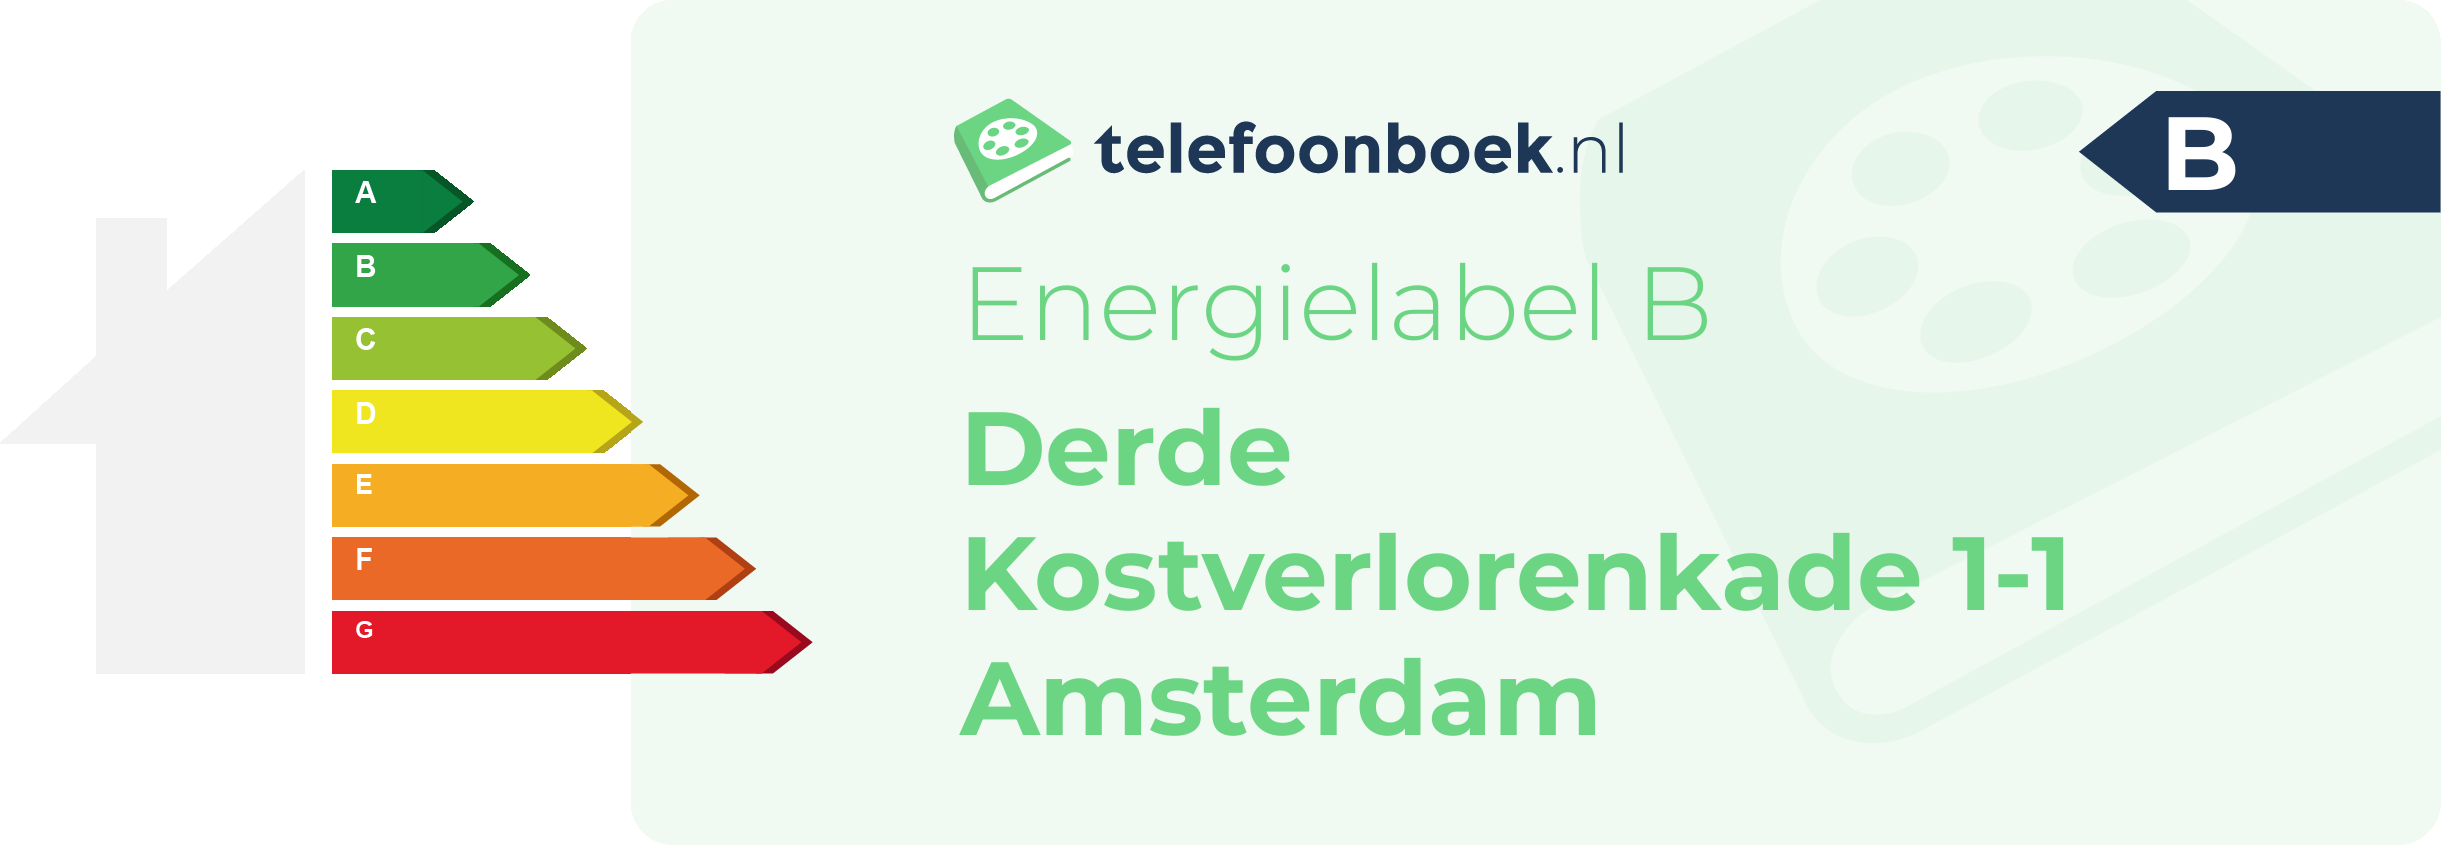 Energielabel Derde Kostverlorenkade 1-1 Amsterdam